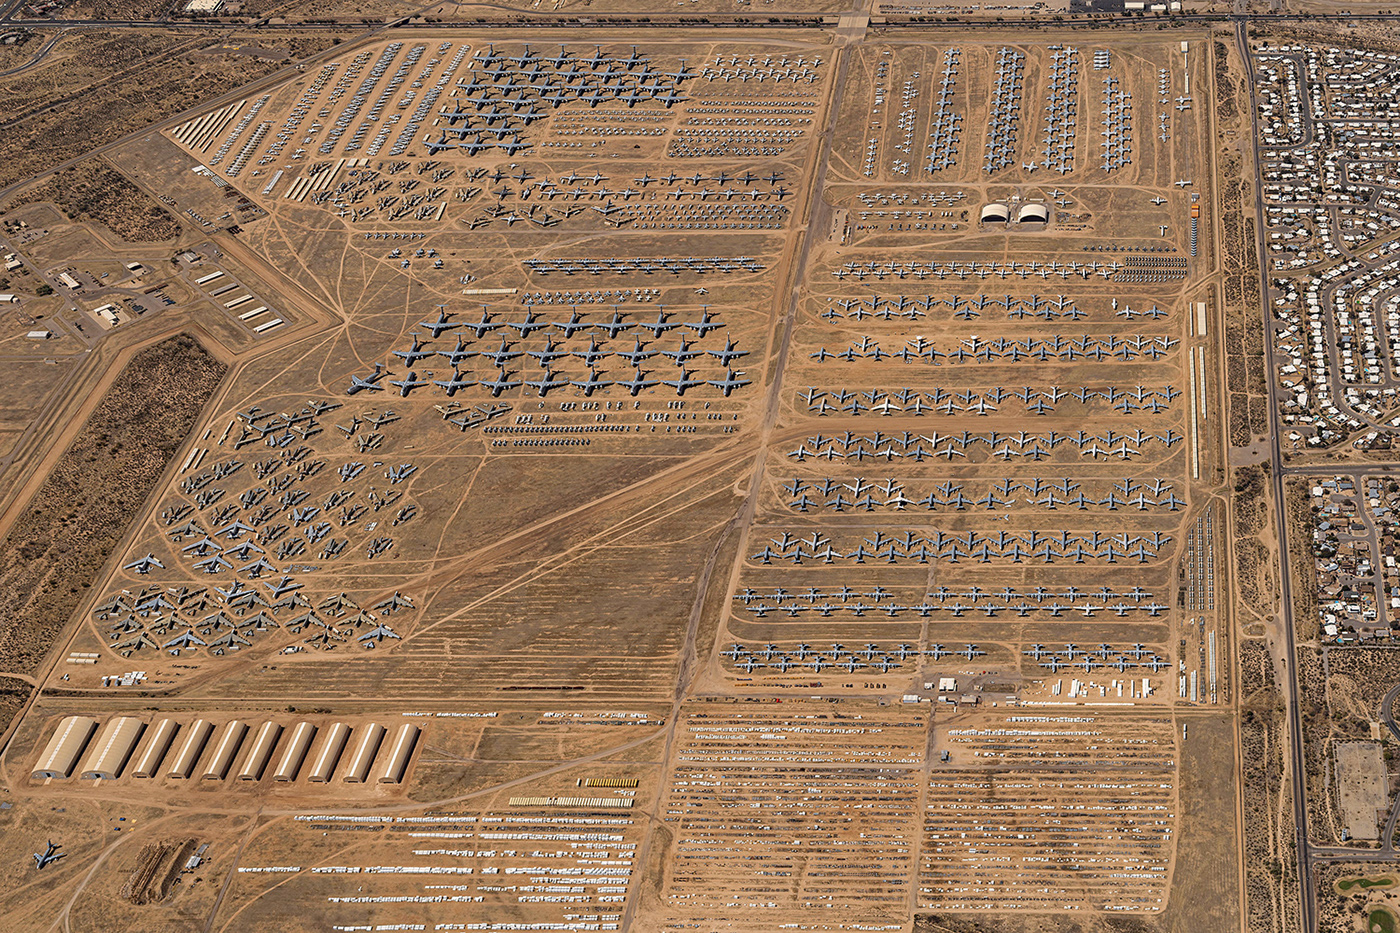 boneyard airplane desert arizona graveyard Military tucson usa america plane